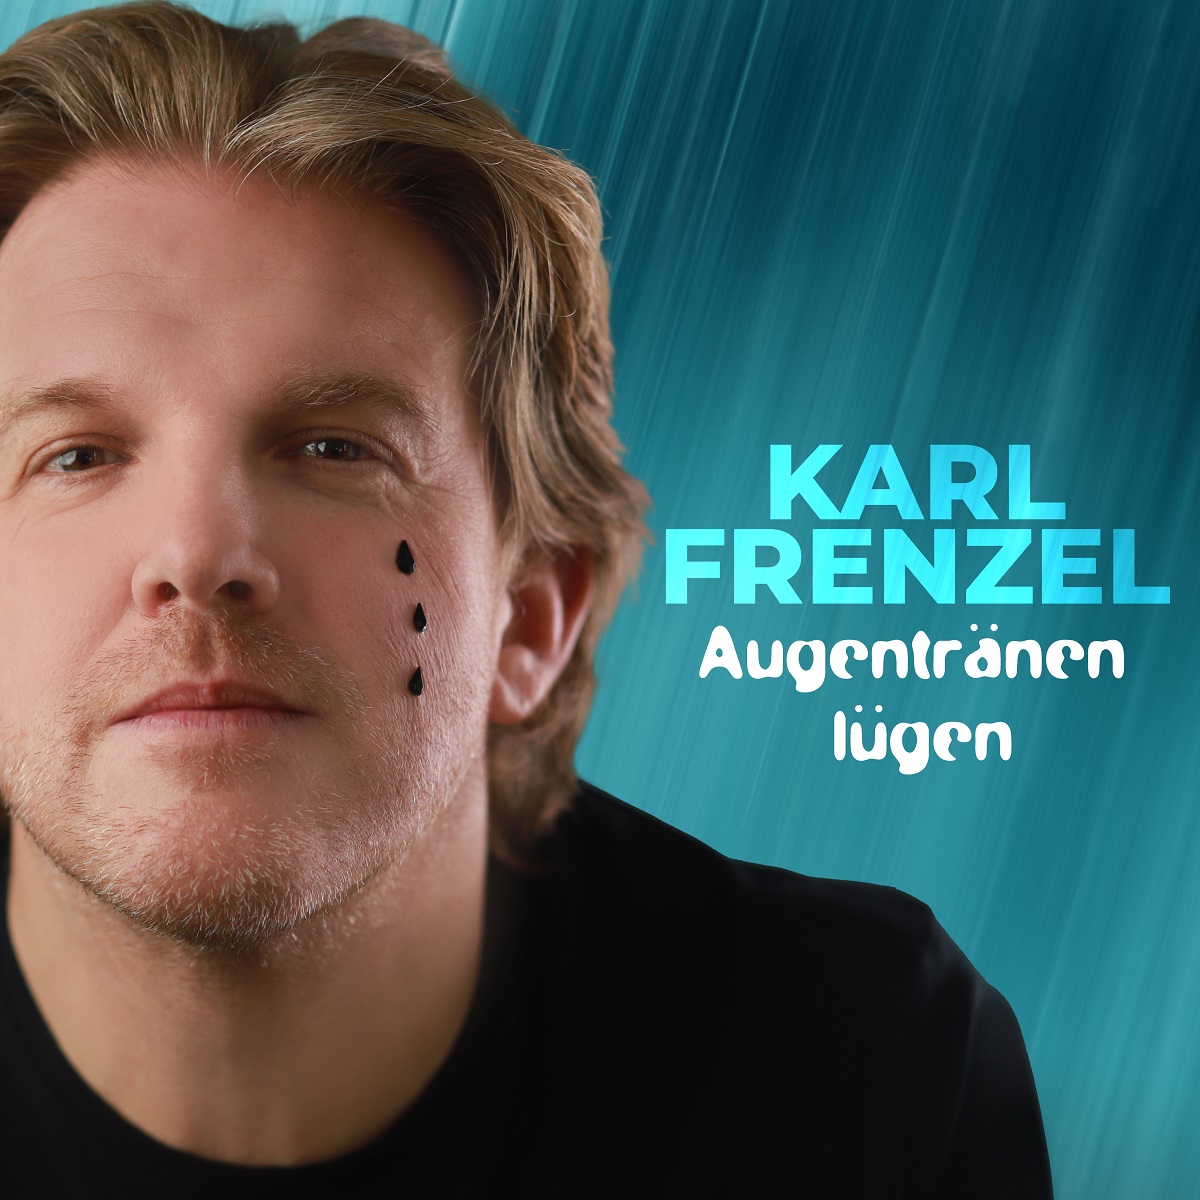 Karl Frenzel - Augentrnen lgen - Cover.jpg